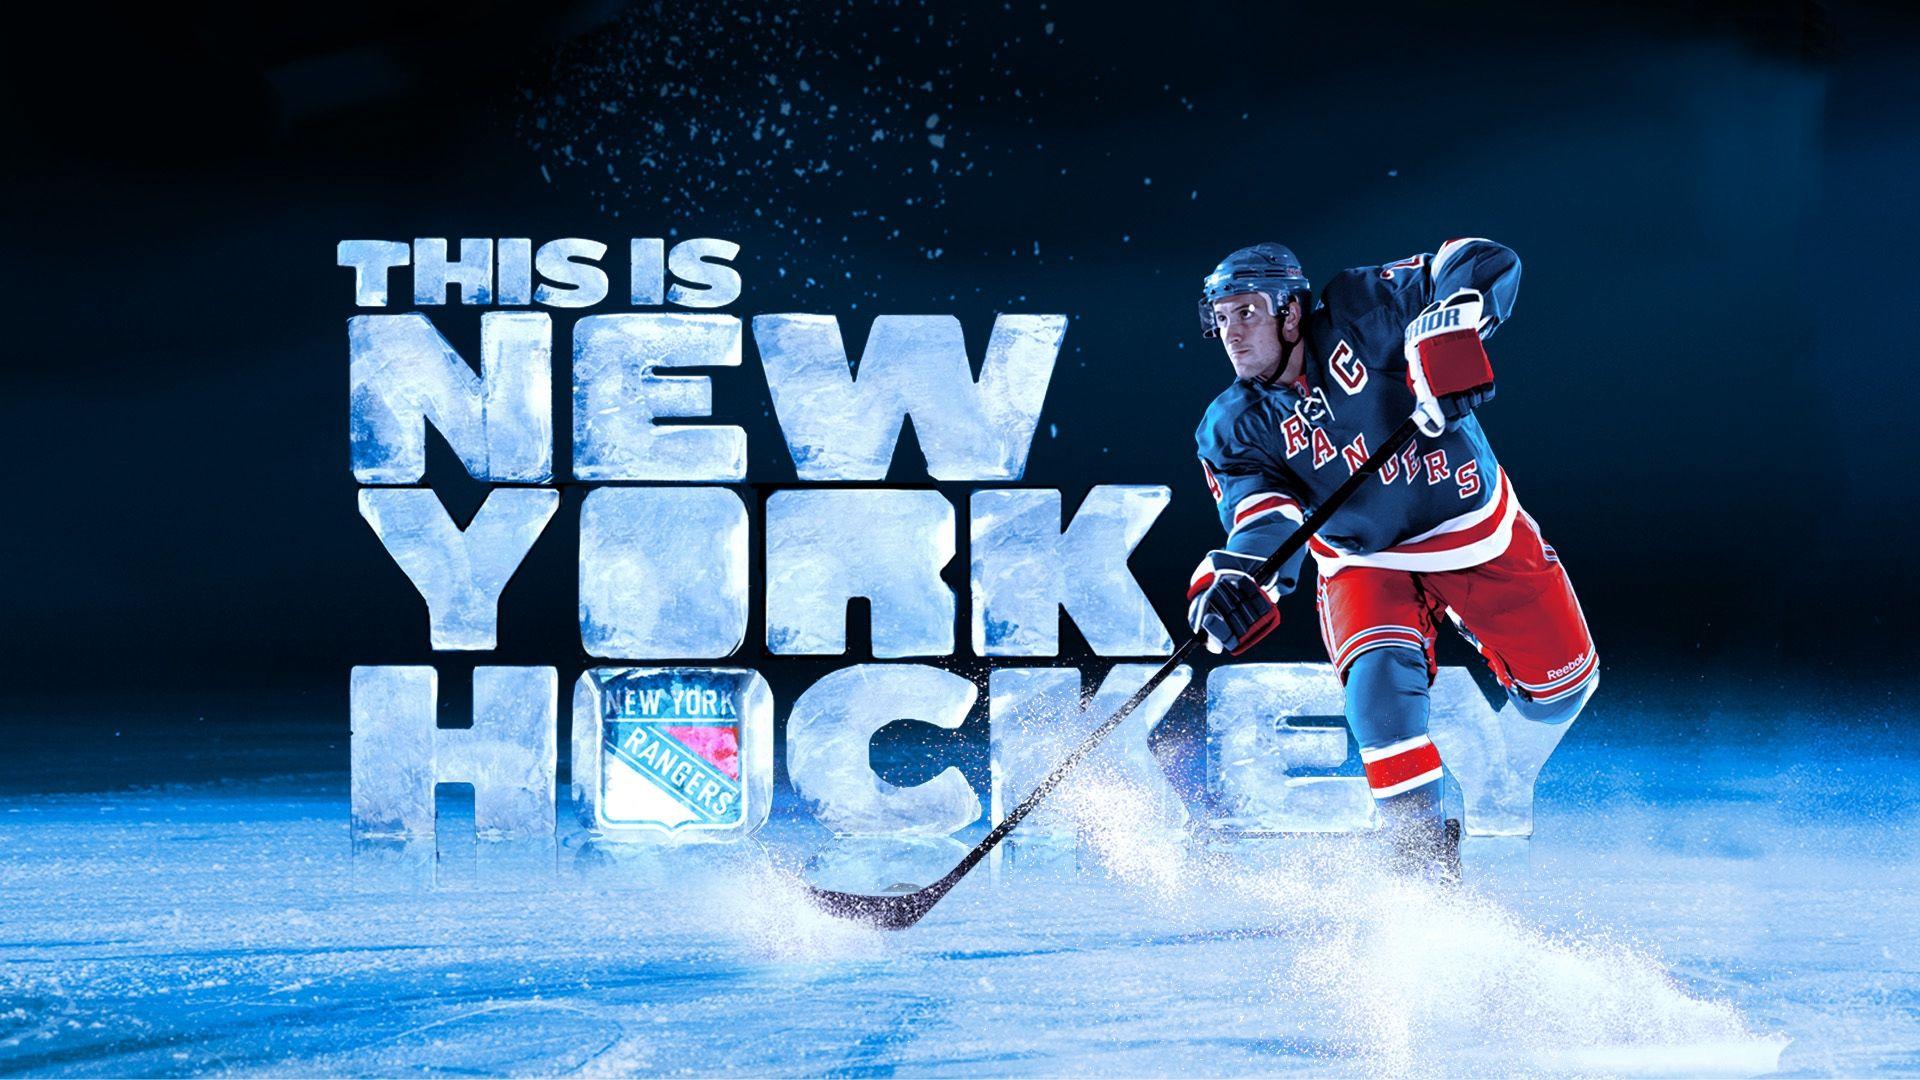 Download wallpaper 1920x1080 ew york rangers, hockey, ice hockey